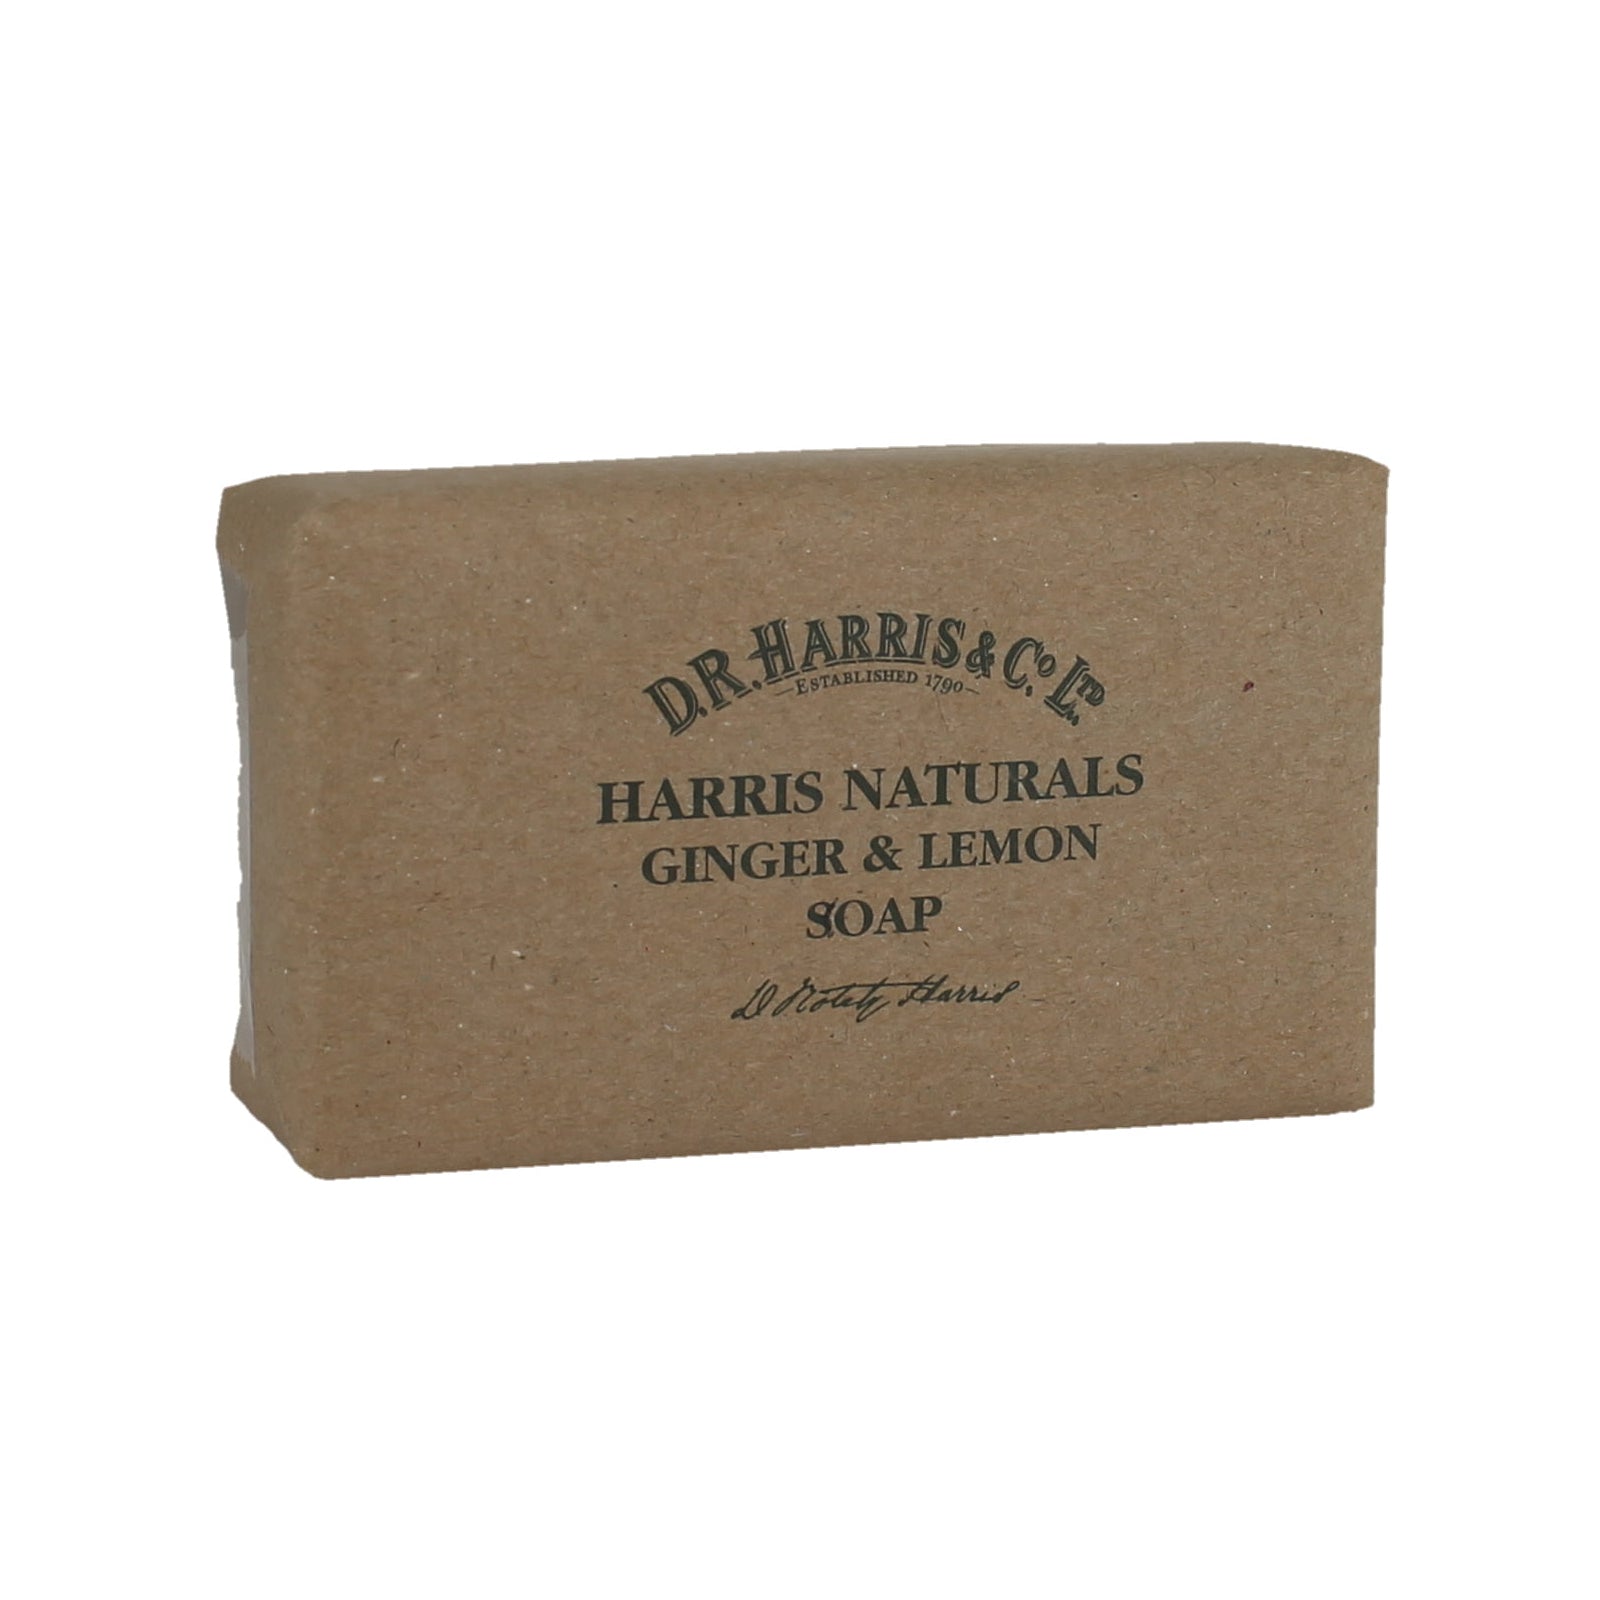 Ginger & Lemon Harris Naturals Soap 200g